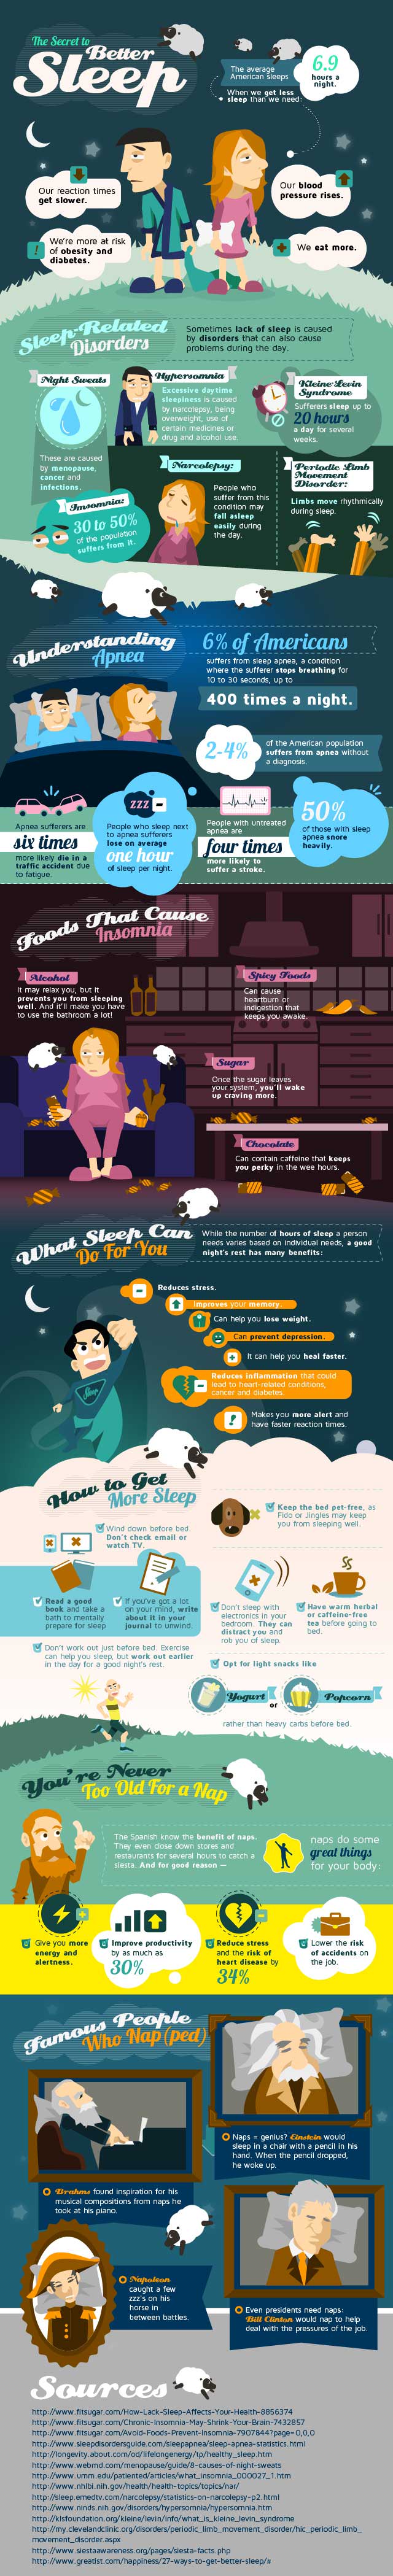 The Secret to Better Sleep Infographic